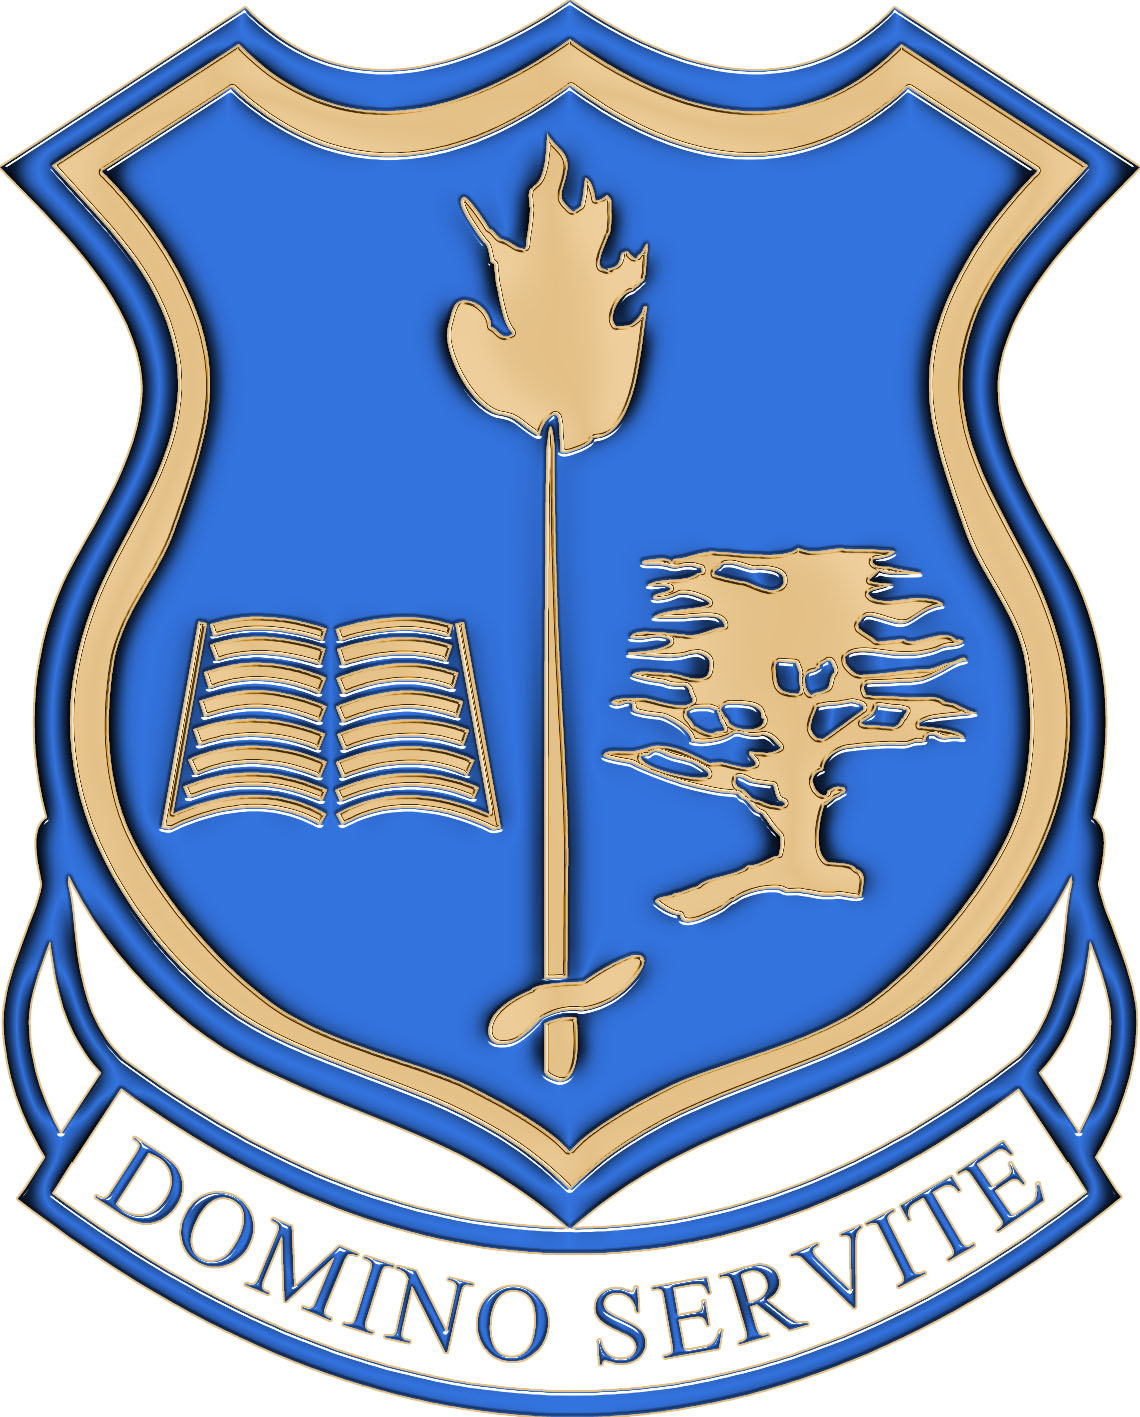 Școala Gimnazială Domino Servite logo